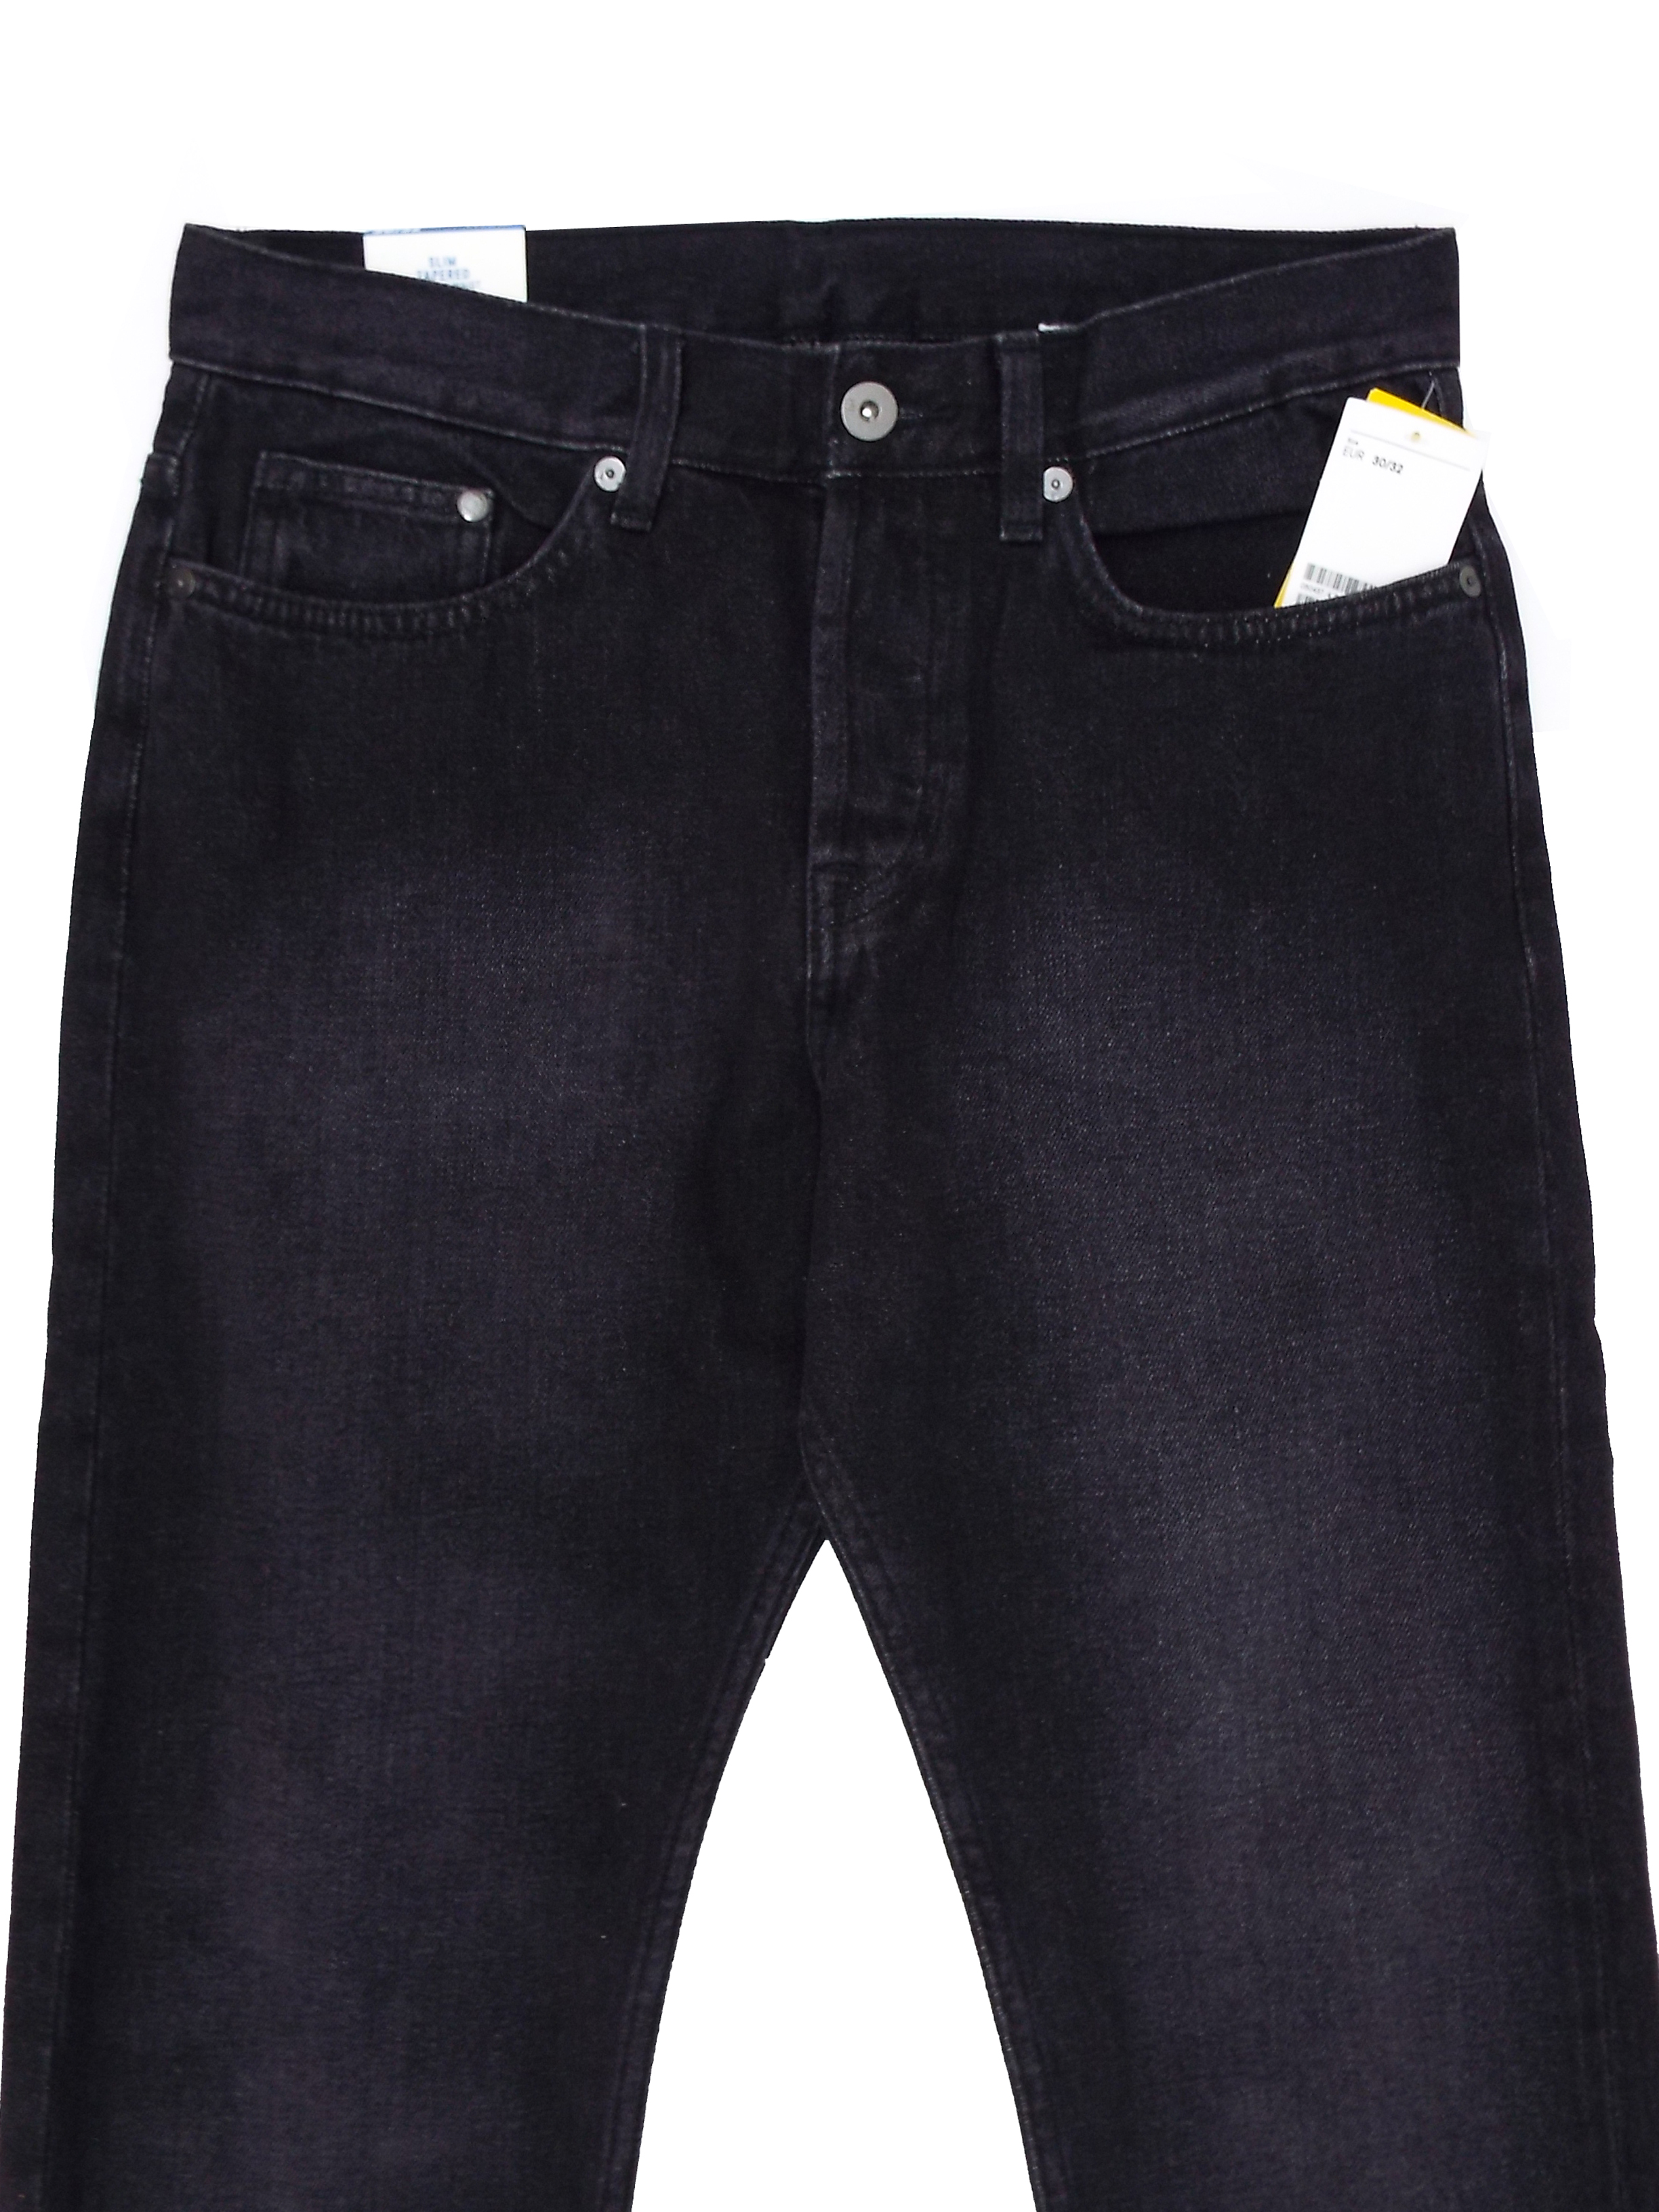 H&M BLACK Pure Cotton Slim Tapered Denim Jeans - Waist Size 27 to 38 ...